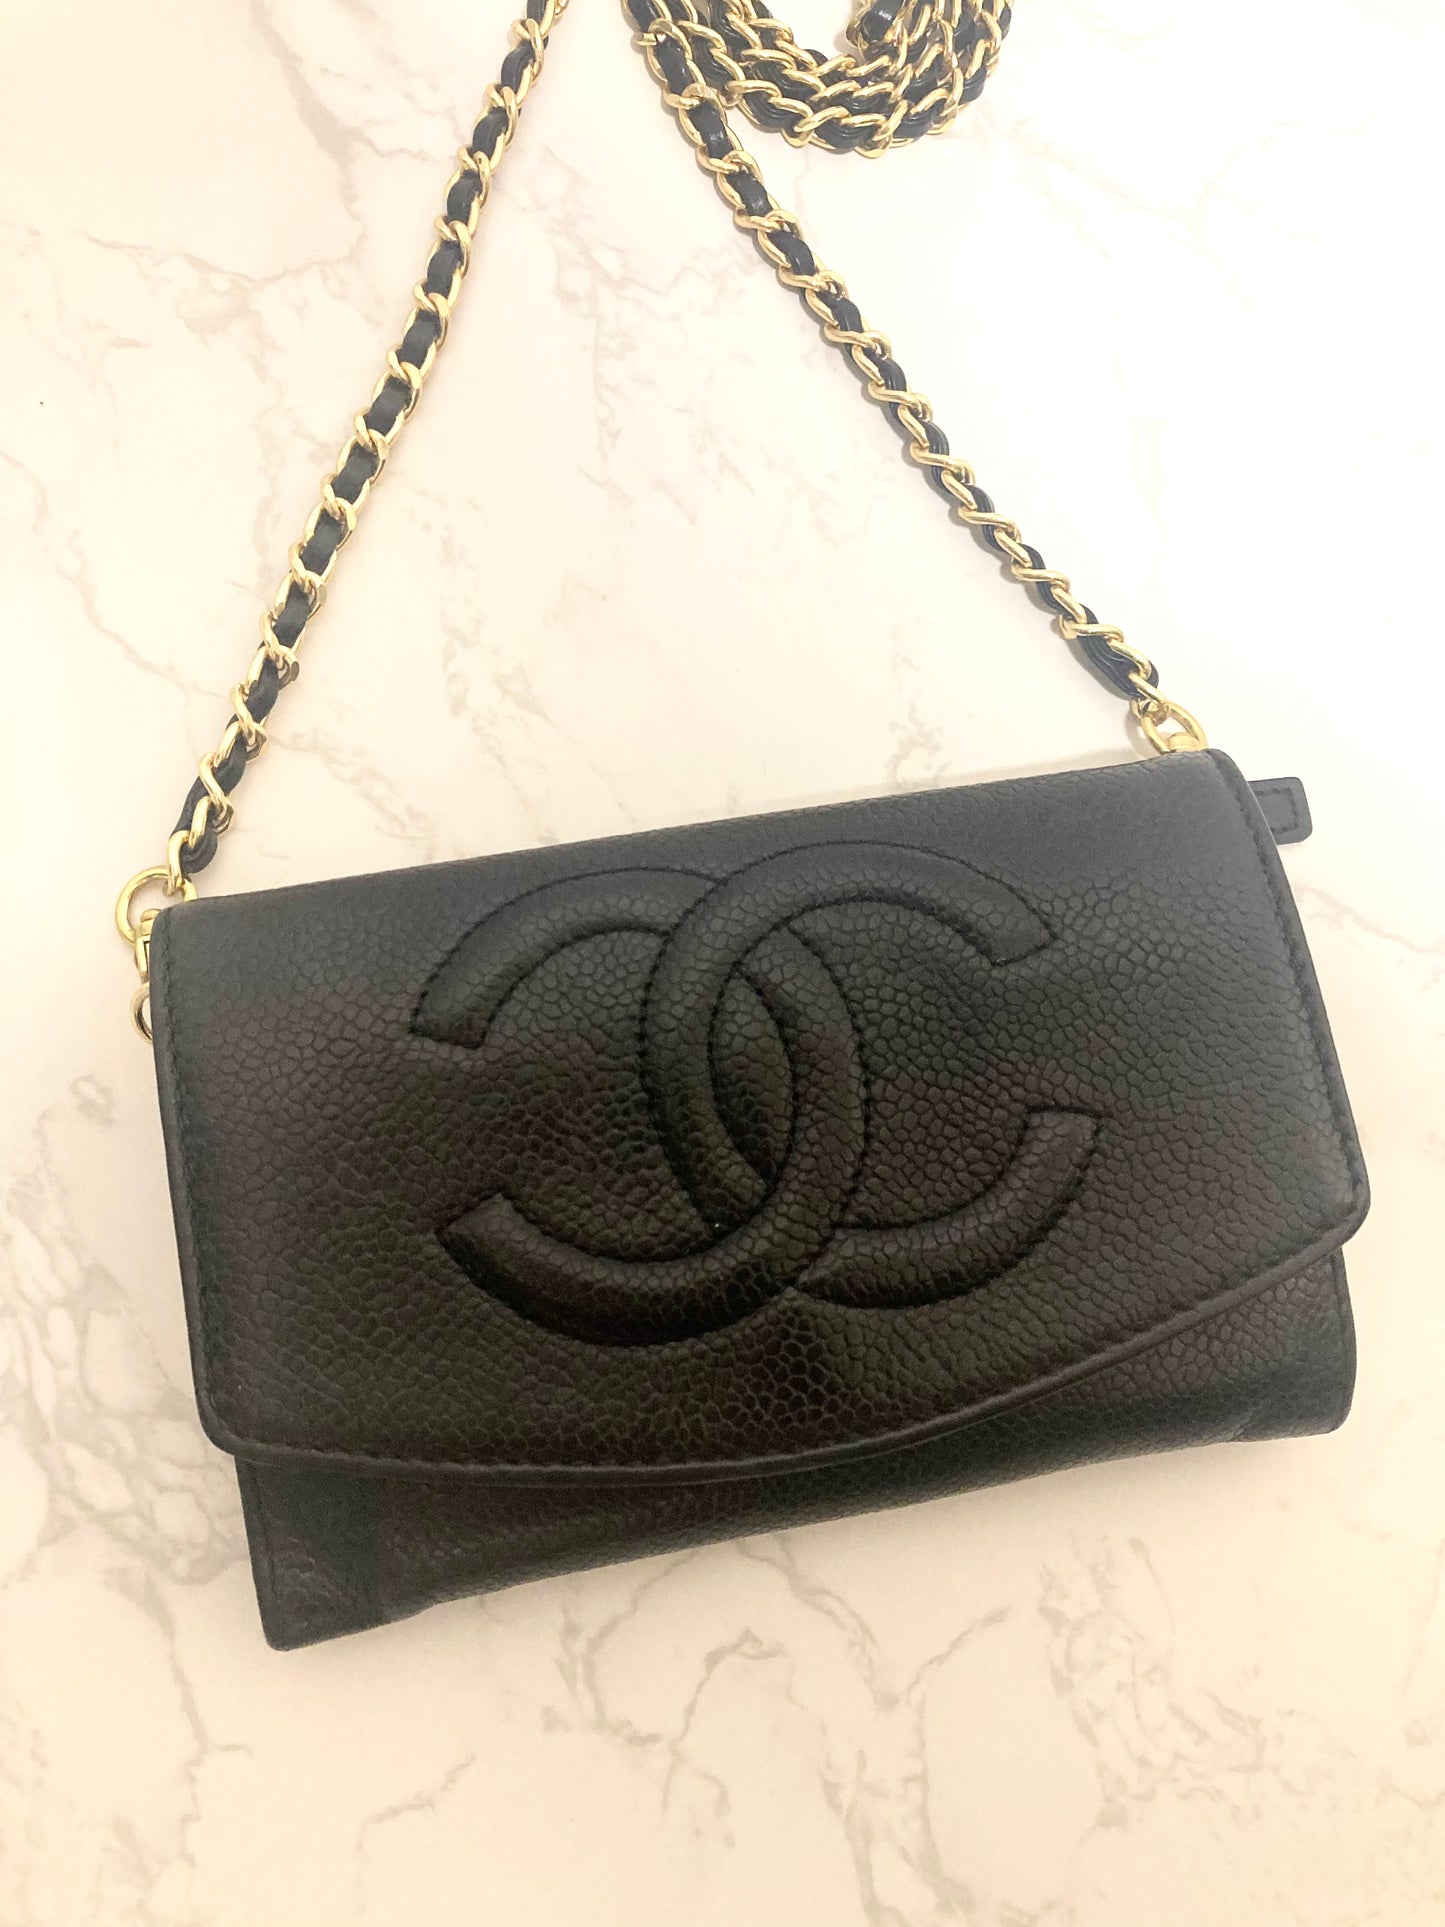 CHANEL Black Caviar Leather Chain Shoulder Bag (Add-on)